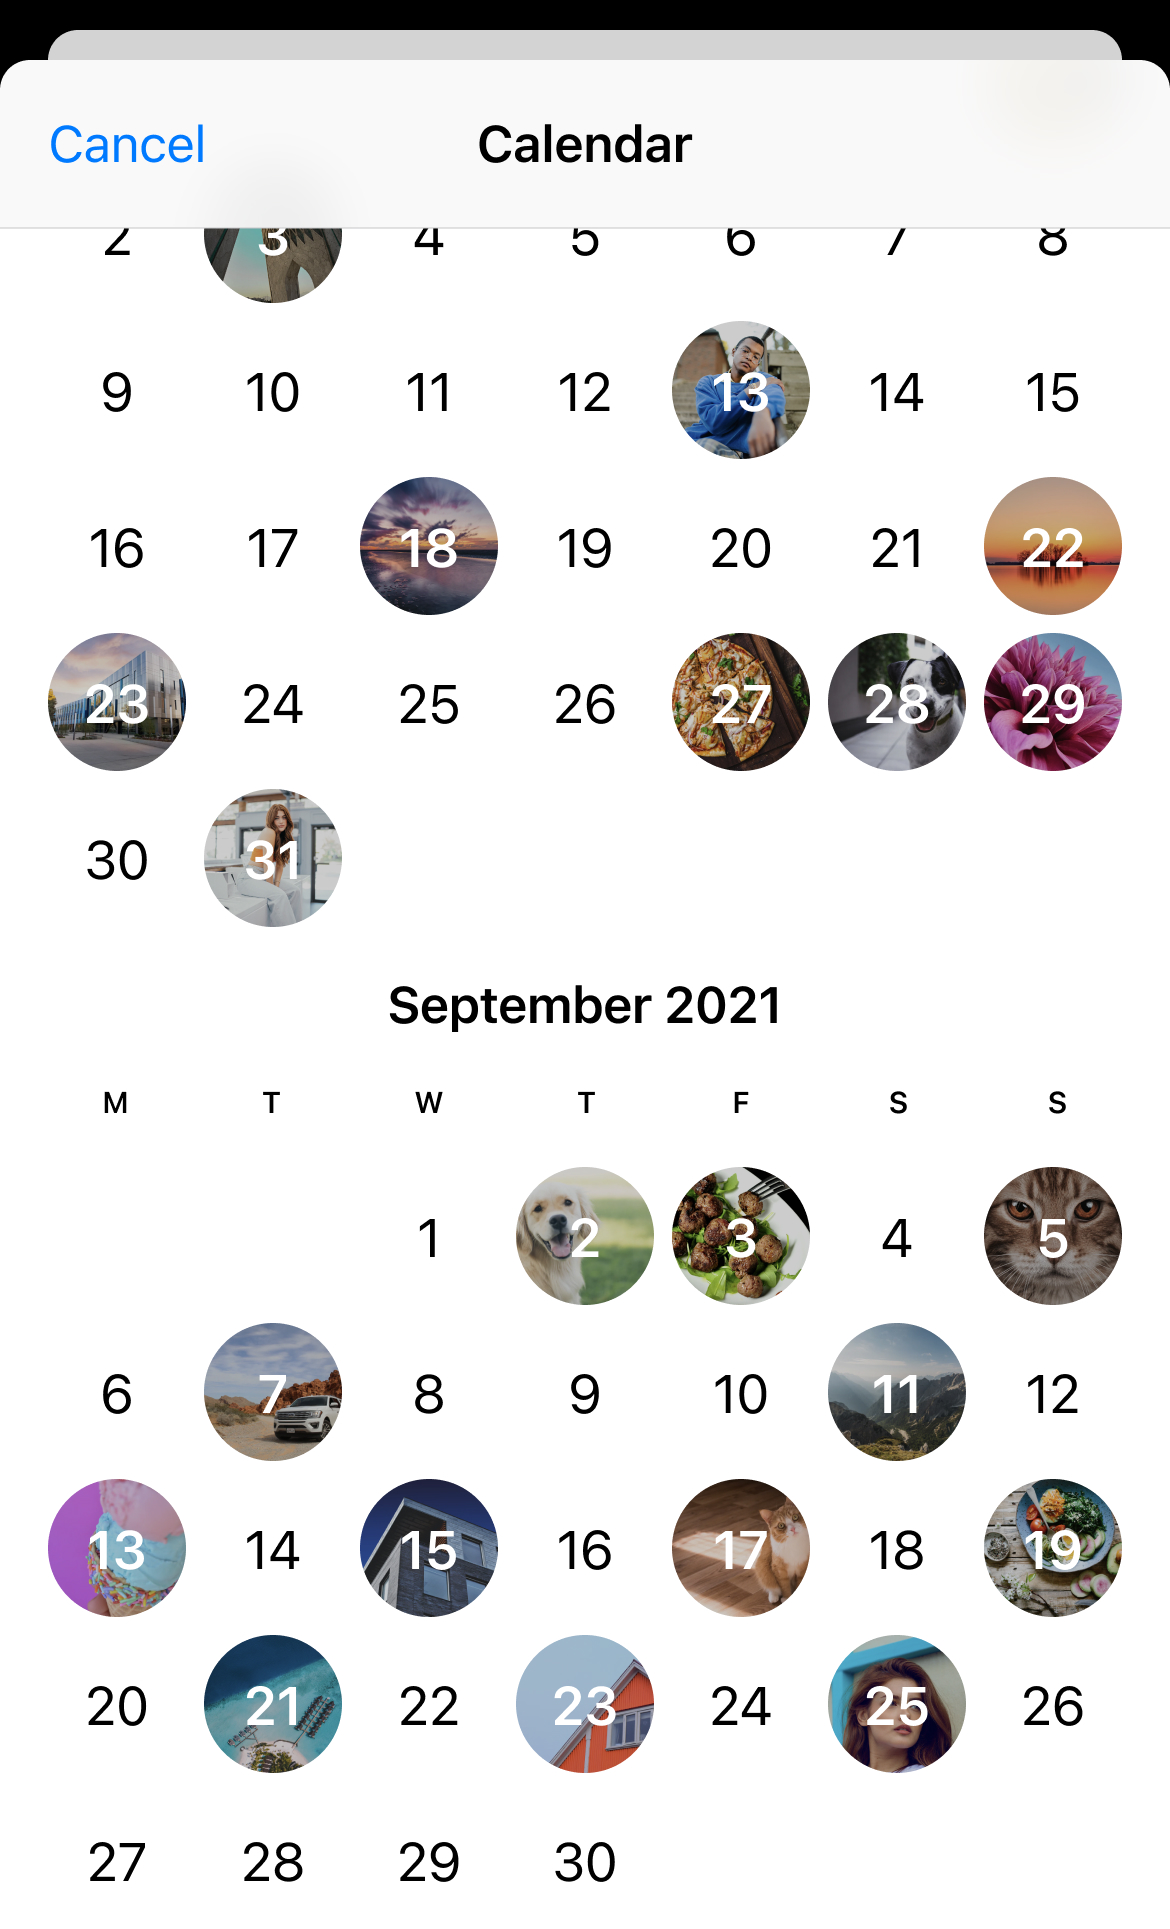 Calendar view in shared media